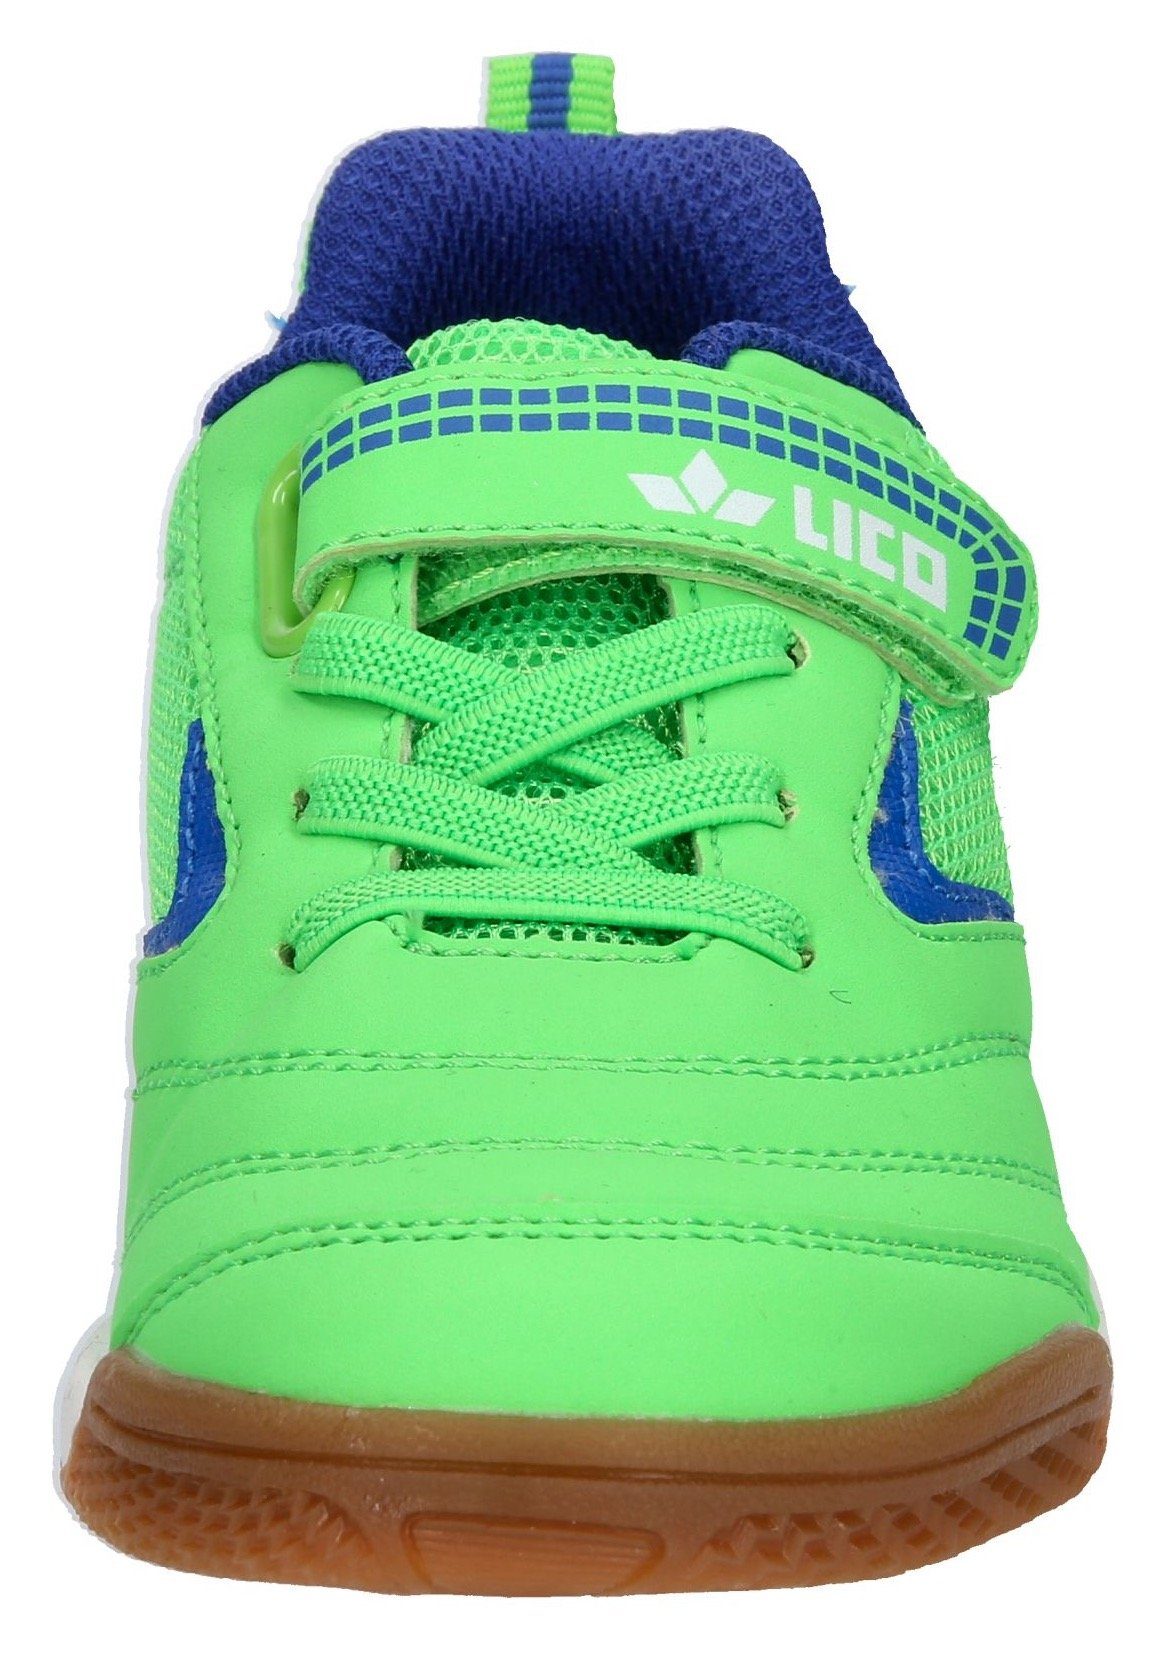 VS heller Ari Laufsohle grün-blau Lico WMS mit Sneaker